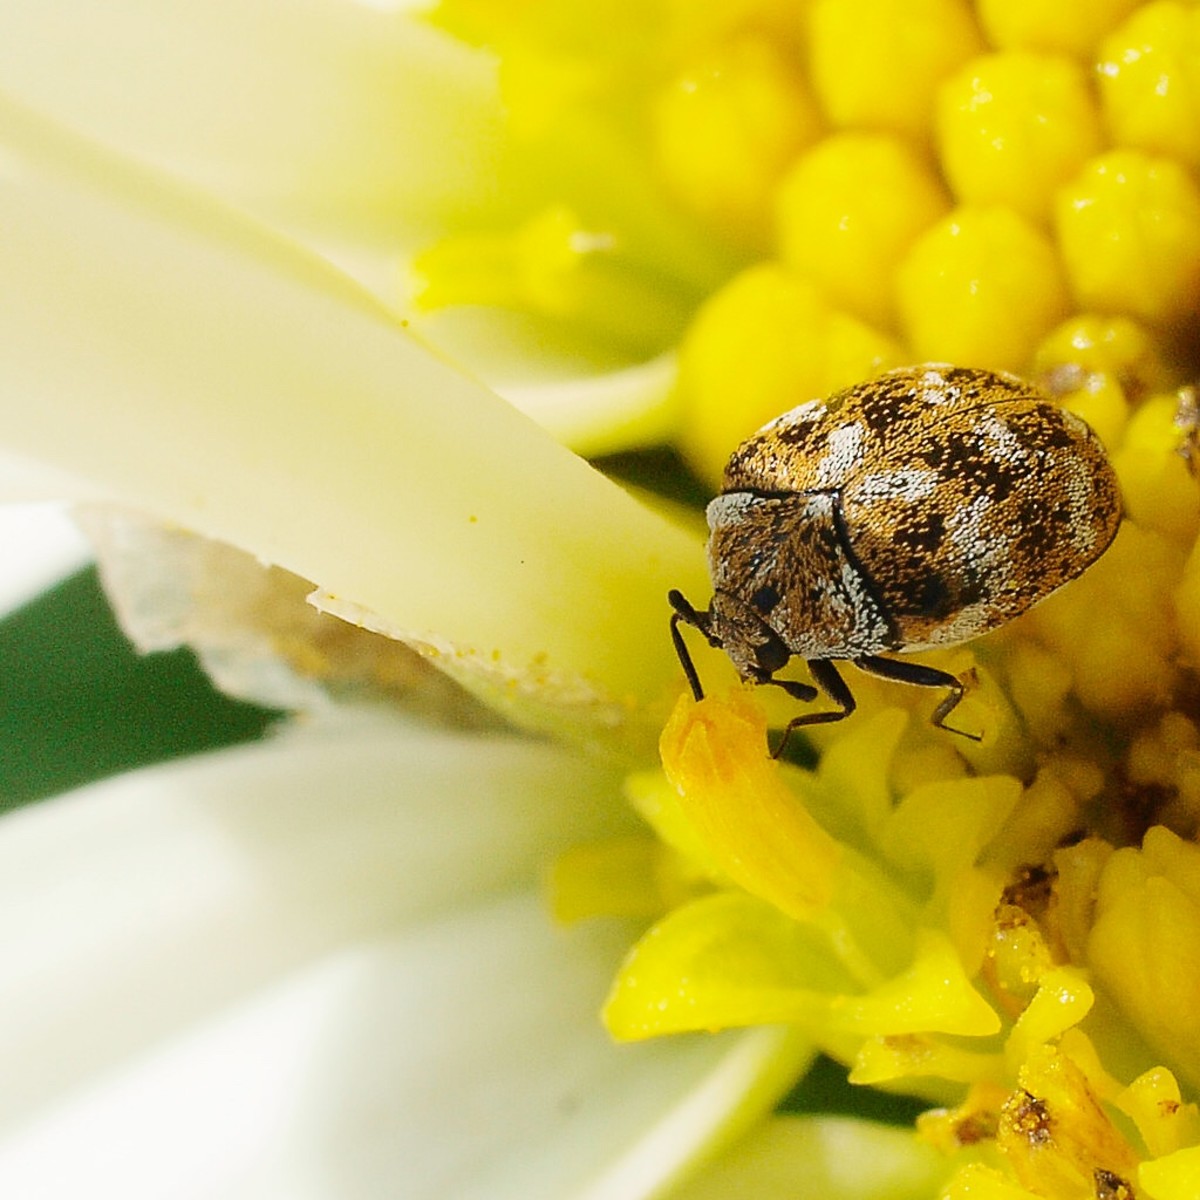 A carpet beetle on an oxeye daisy